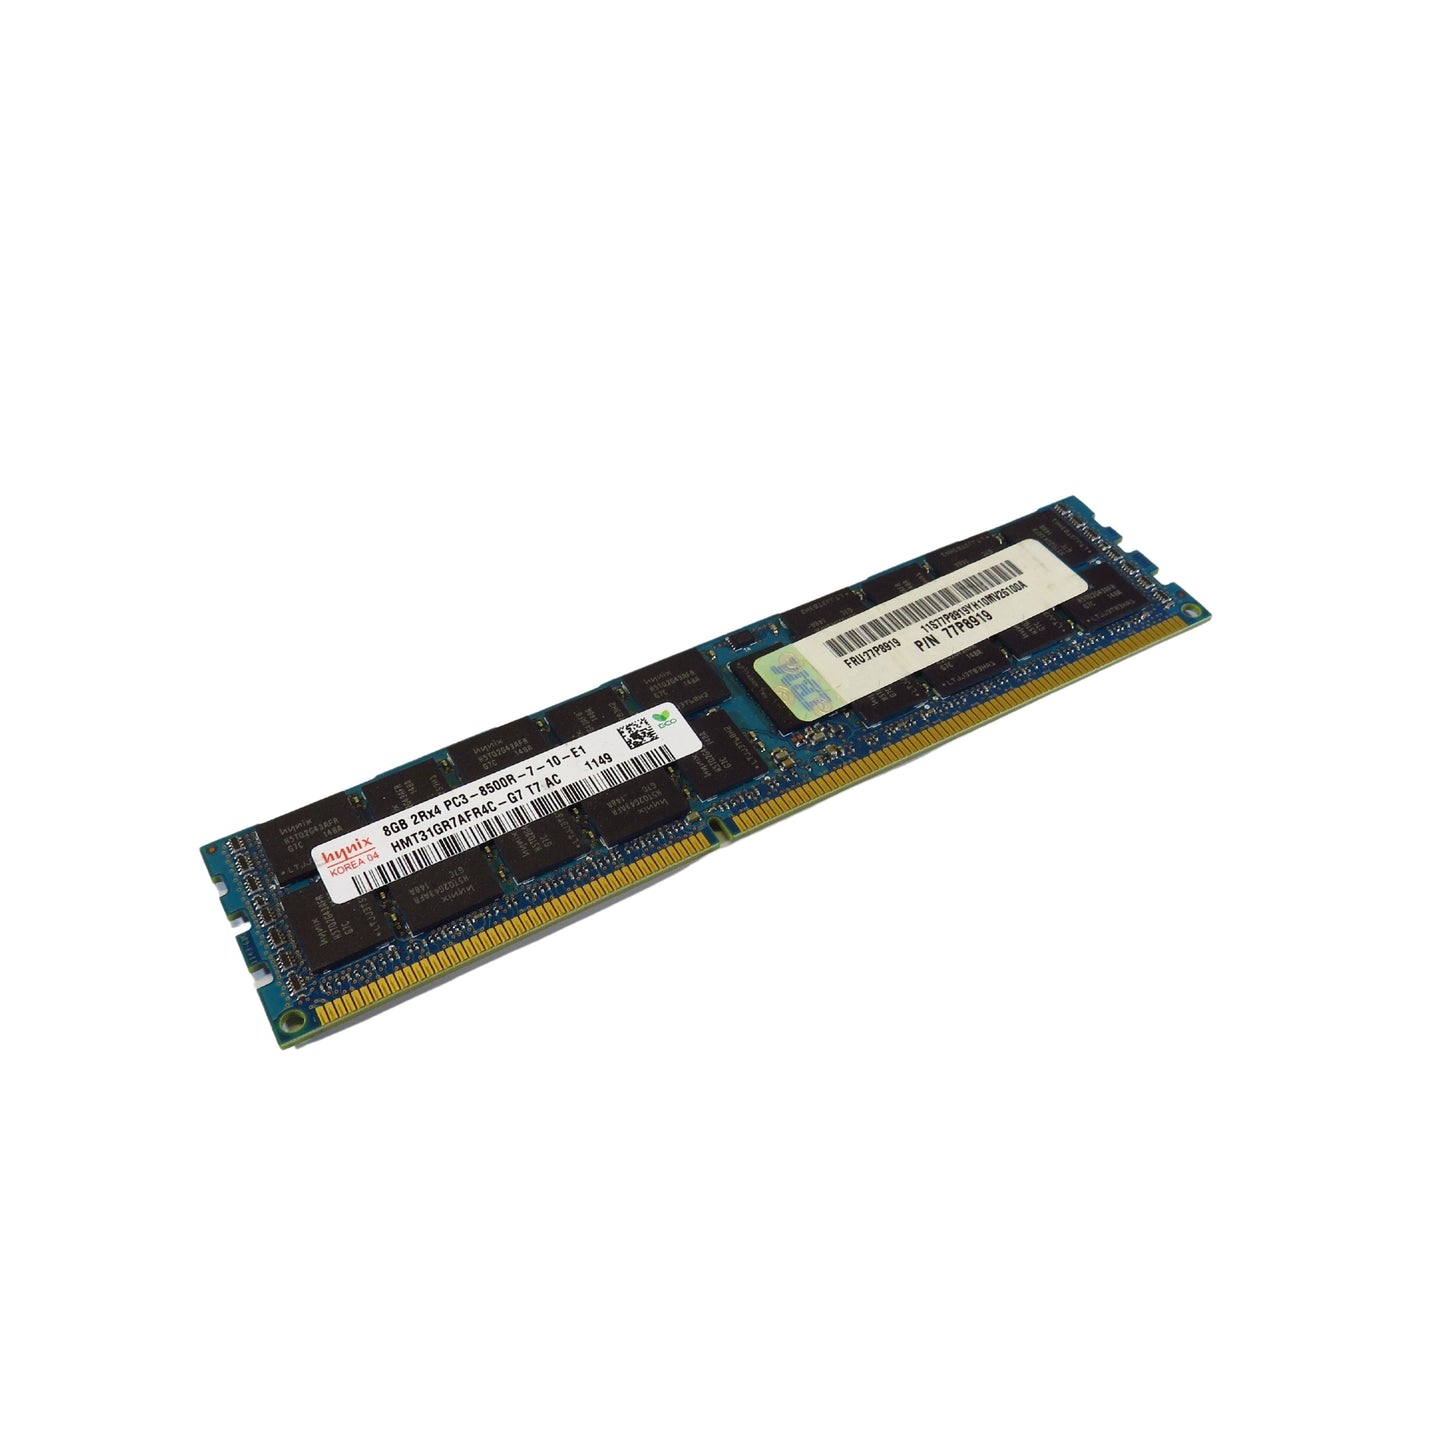 Hynix HMT31GR7AFR4C-G7 8GB 2Rx4 PC3-8500R 1066MHz DDR3 Server Memory (Refurbished)